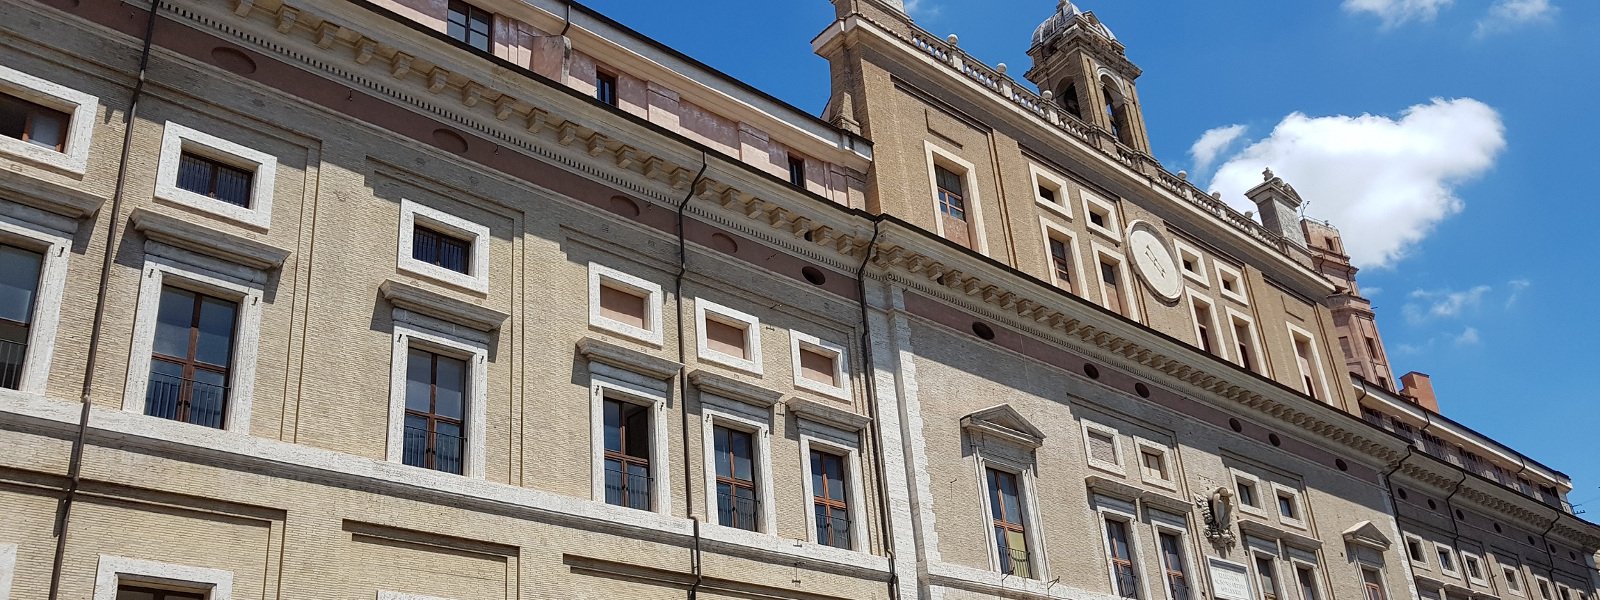 Facade of the Roman College building, adjacent to the church of Saint Ignatius in Rome